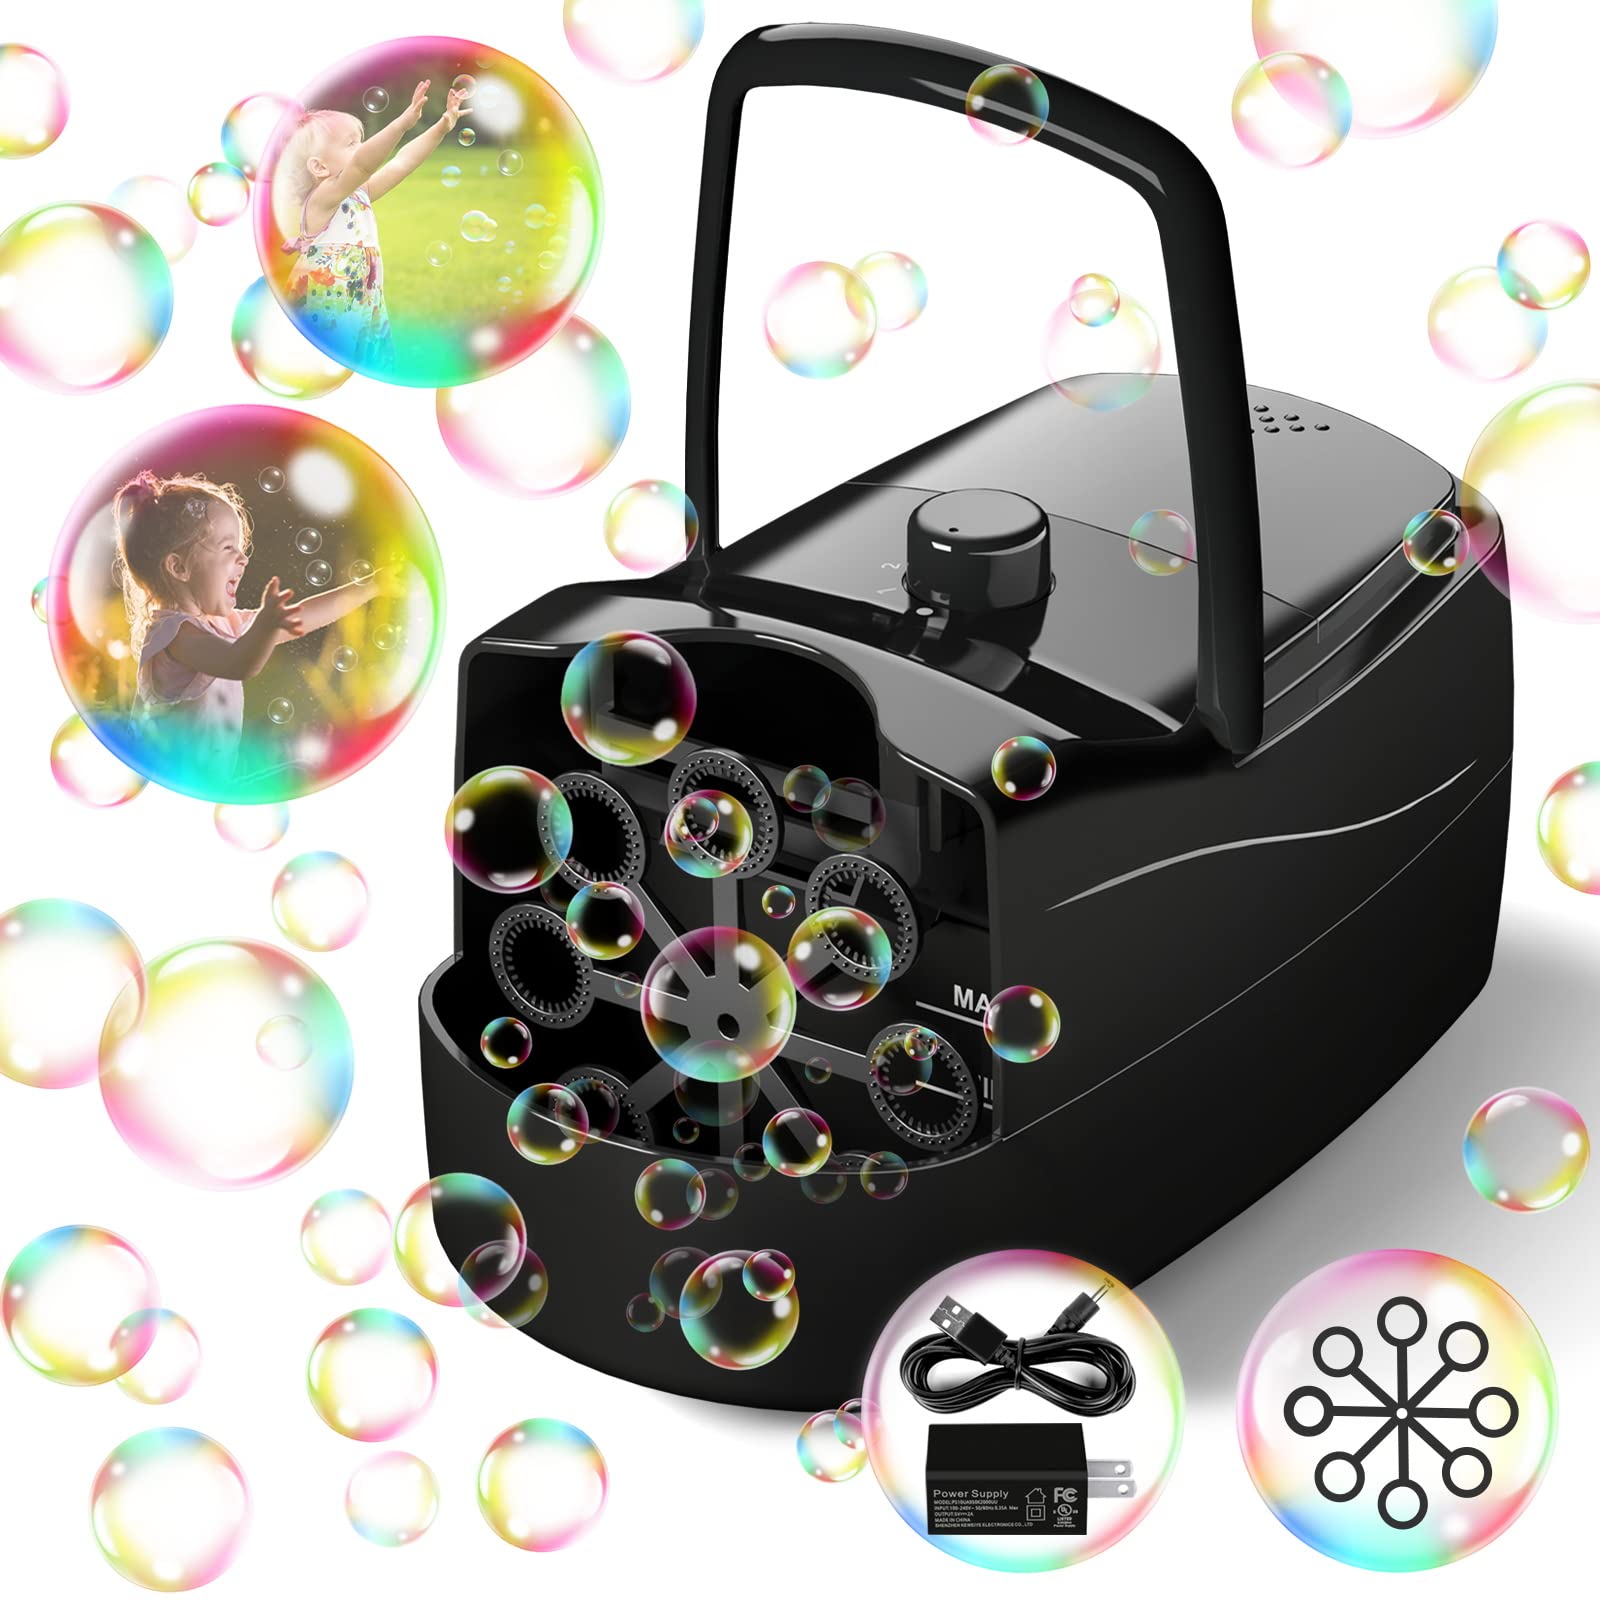 Sizonjoy Bubble Machine Automatic Bubble Blower, 10000+ Bubbles Per Minute with 2 Speeds, 8 Wands Bubble Maker, Plug-in or Batteries Bubb